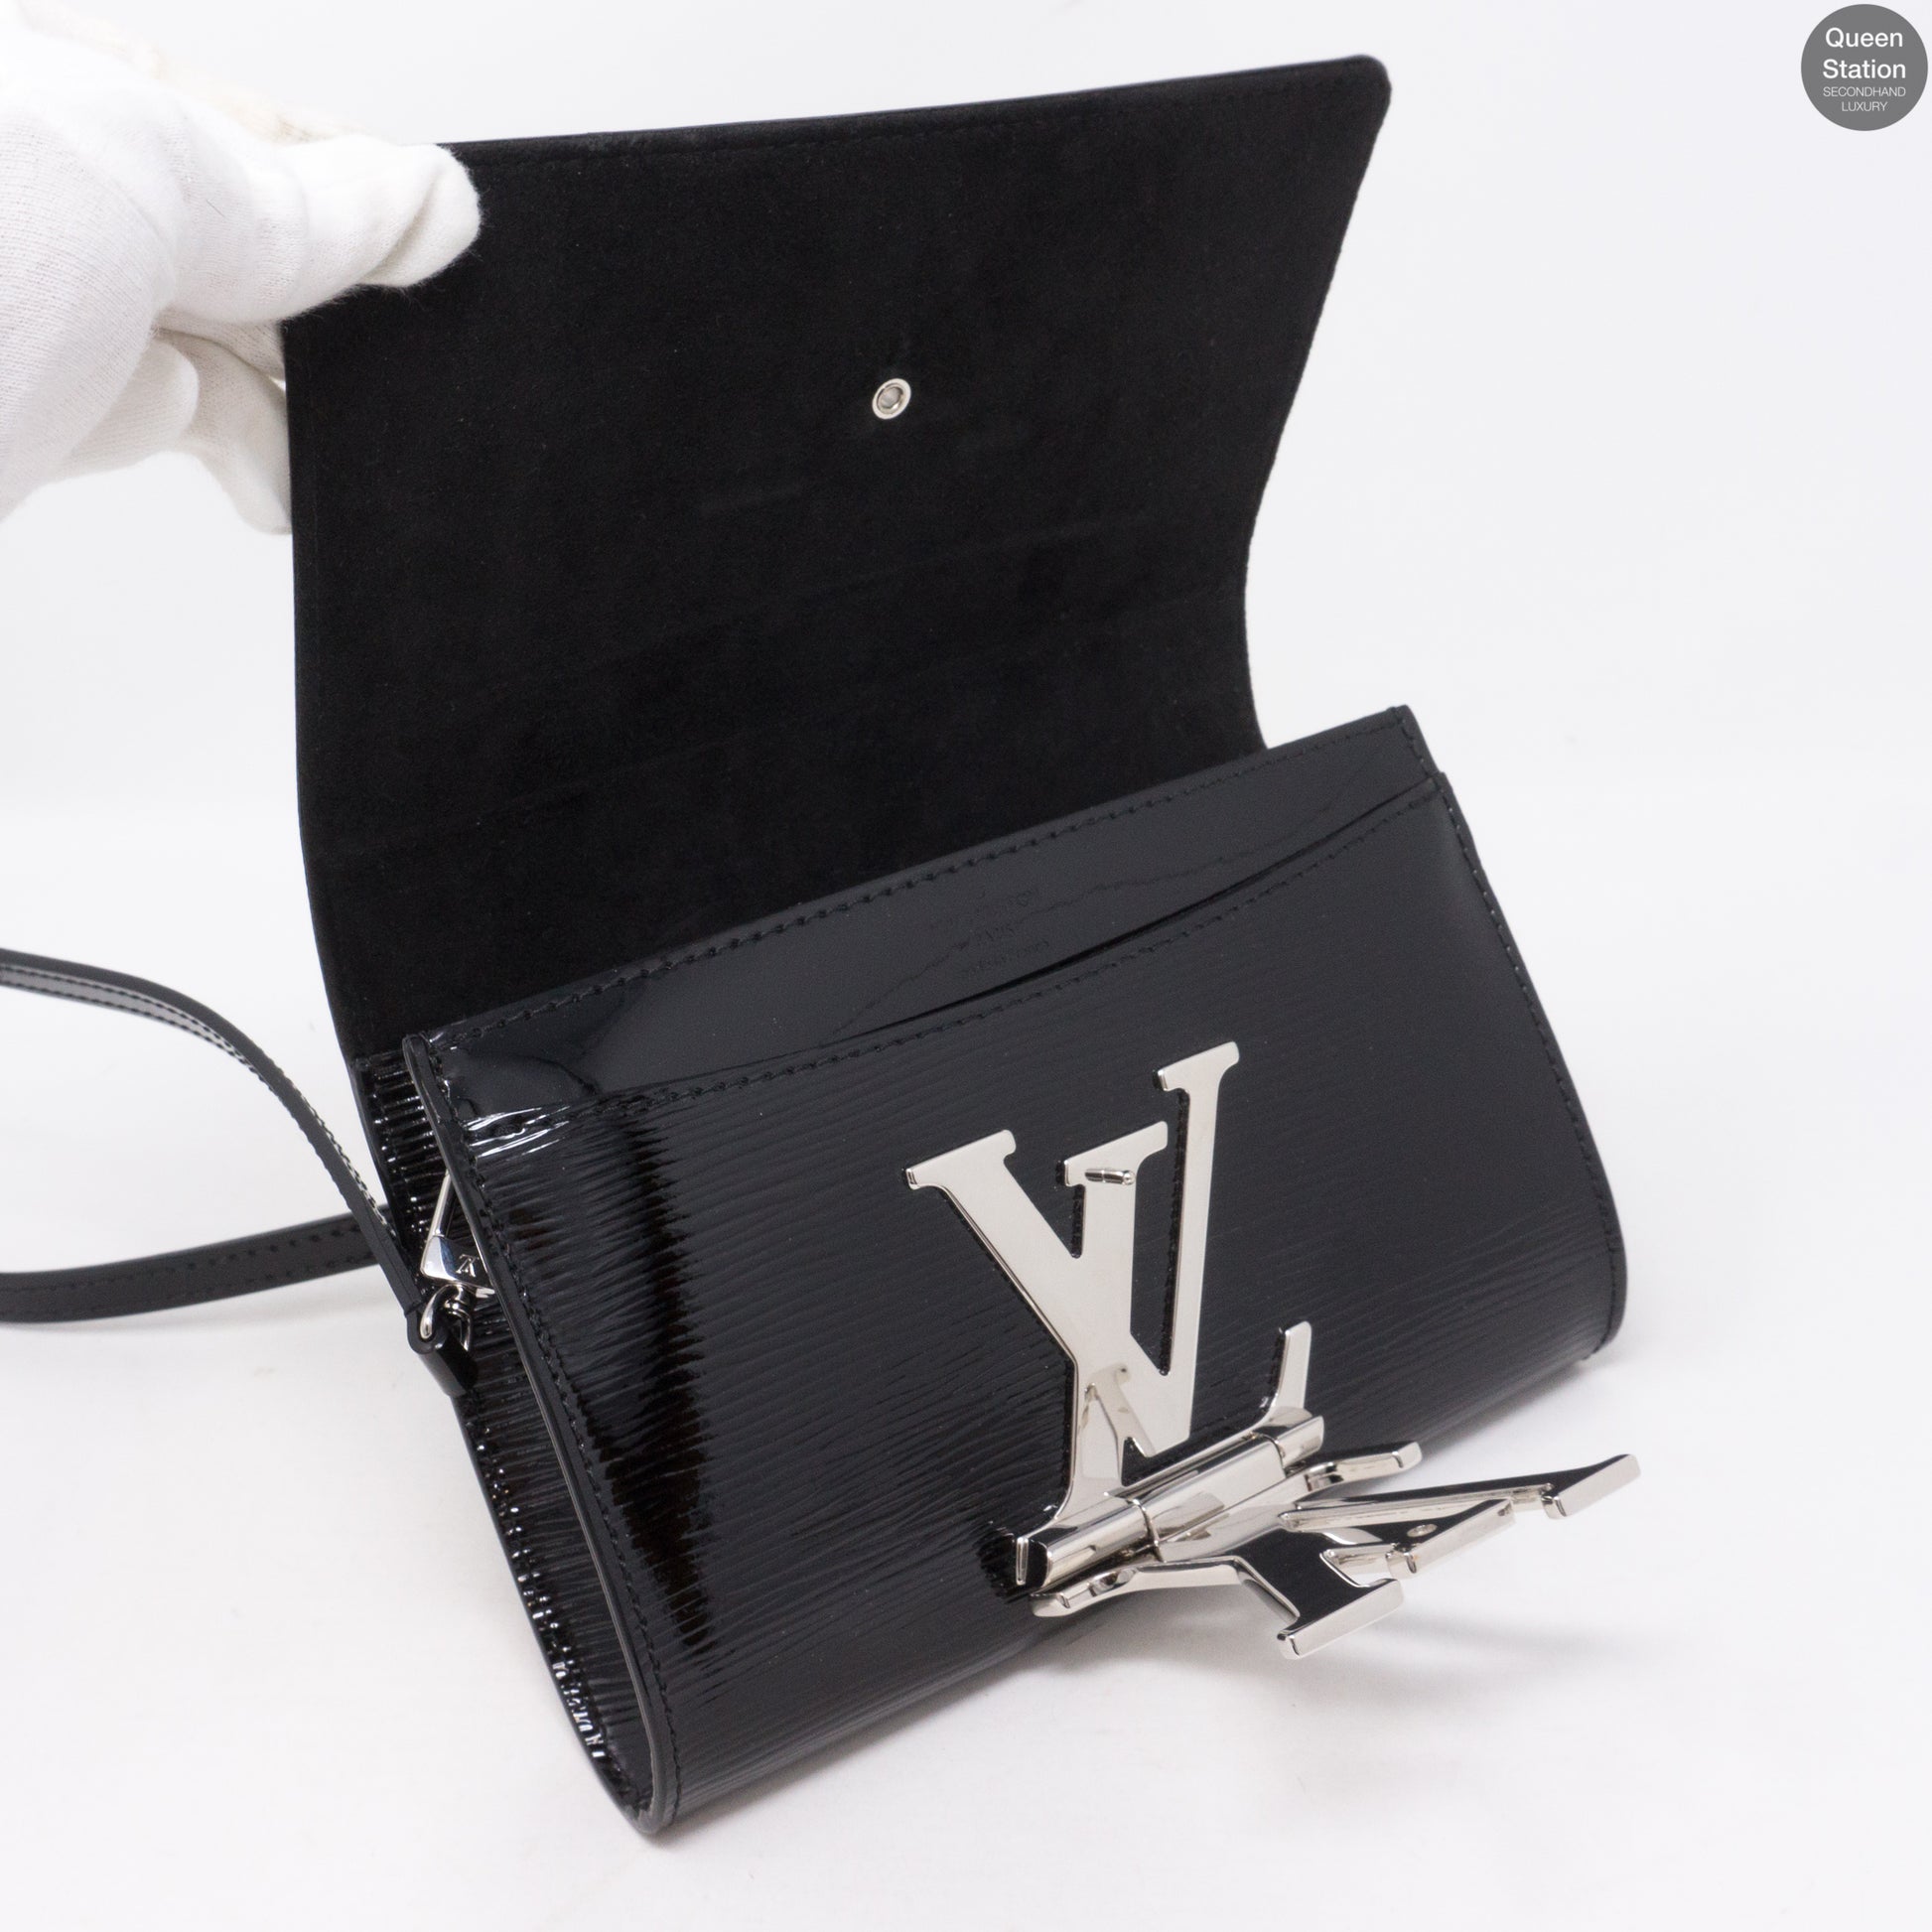 Louis Vuitton Black Electric Epi Louise PM Crossbody Clutch